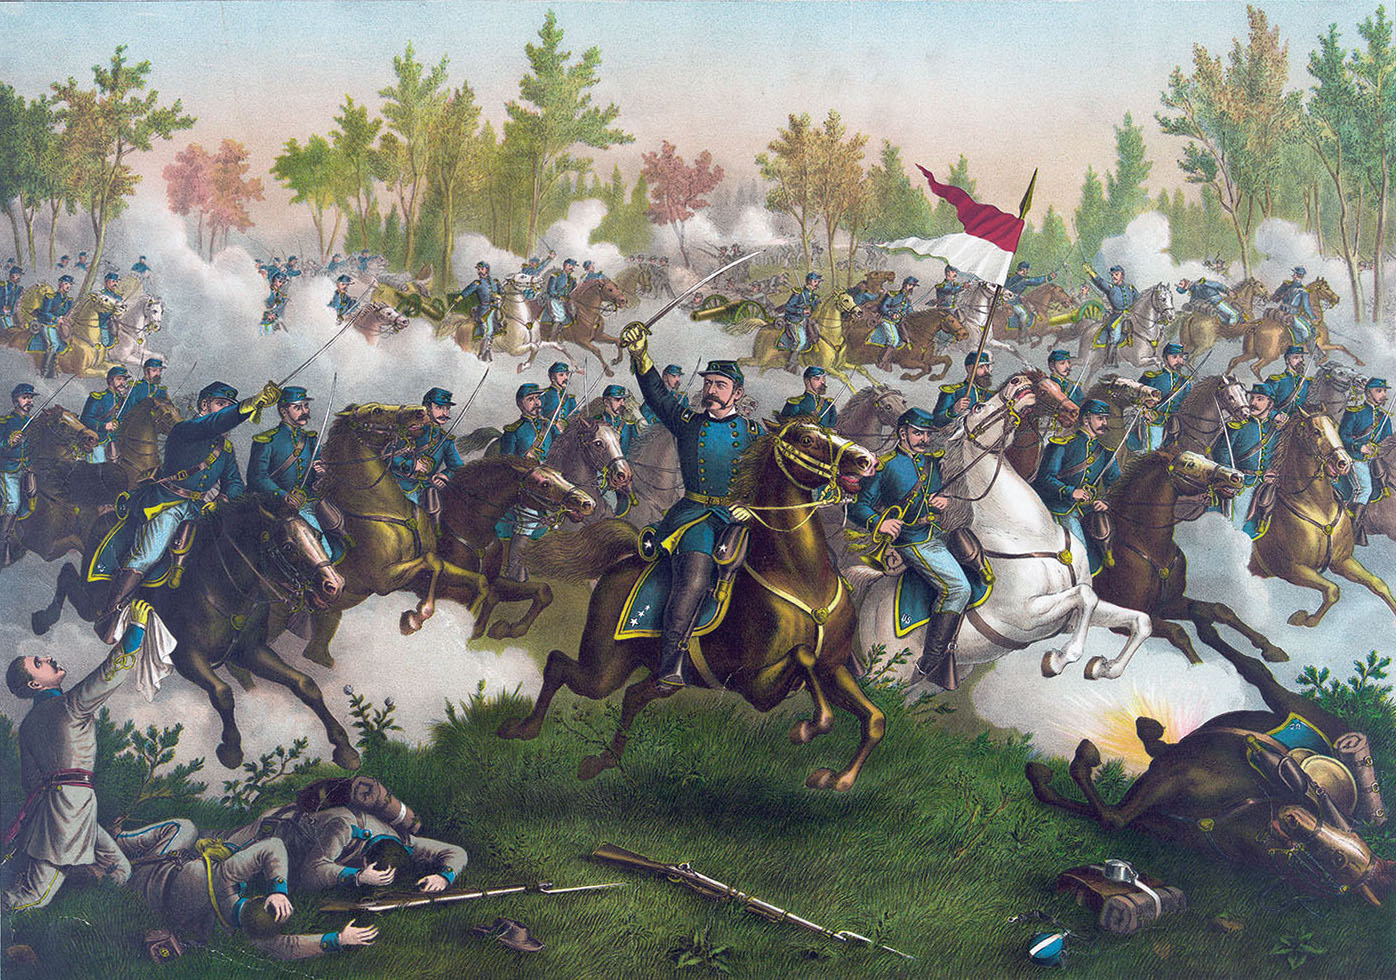 The Battle of Cedar Creek